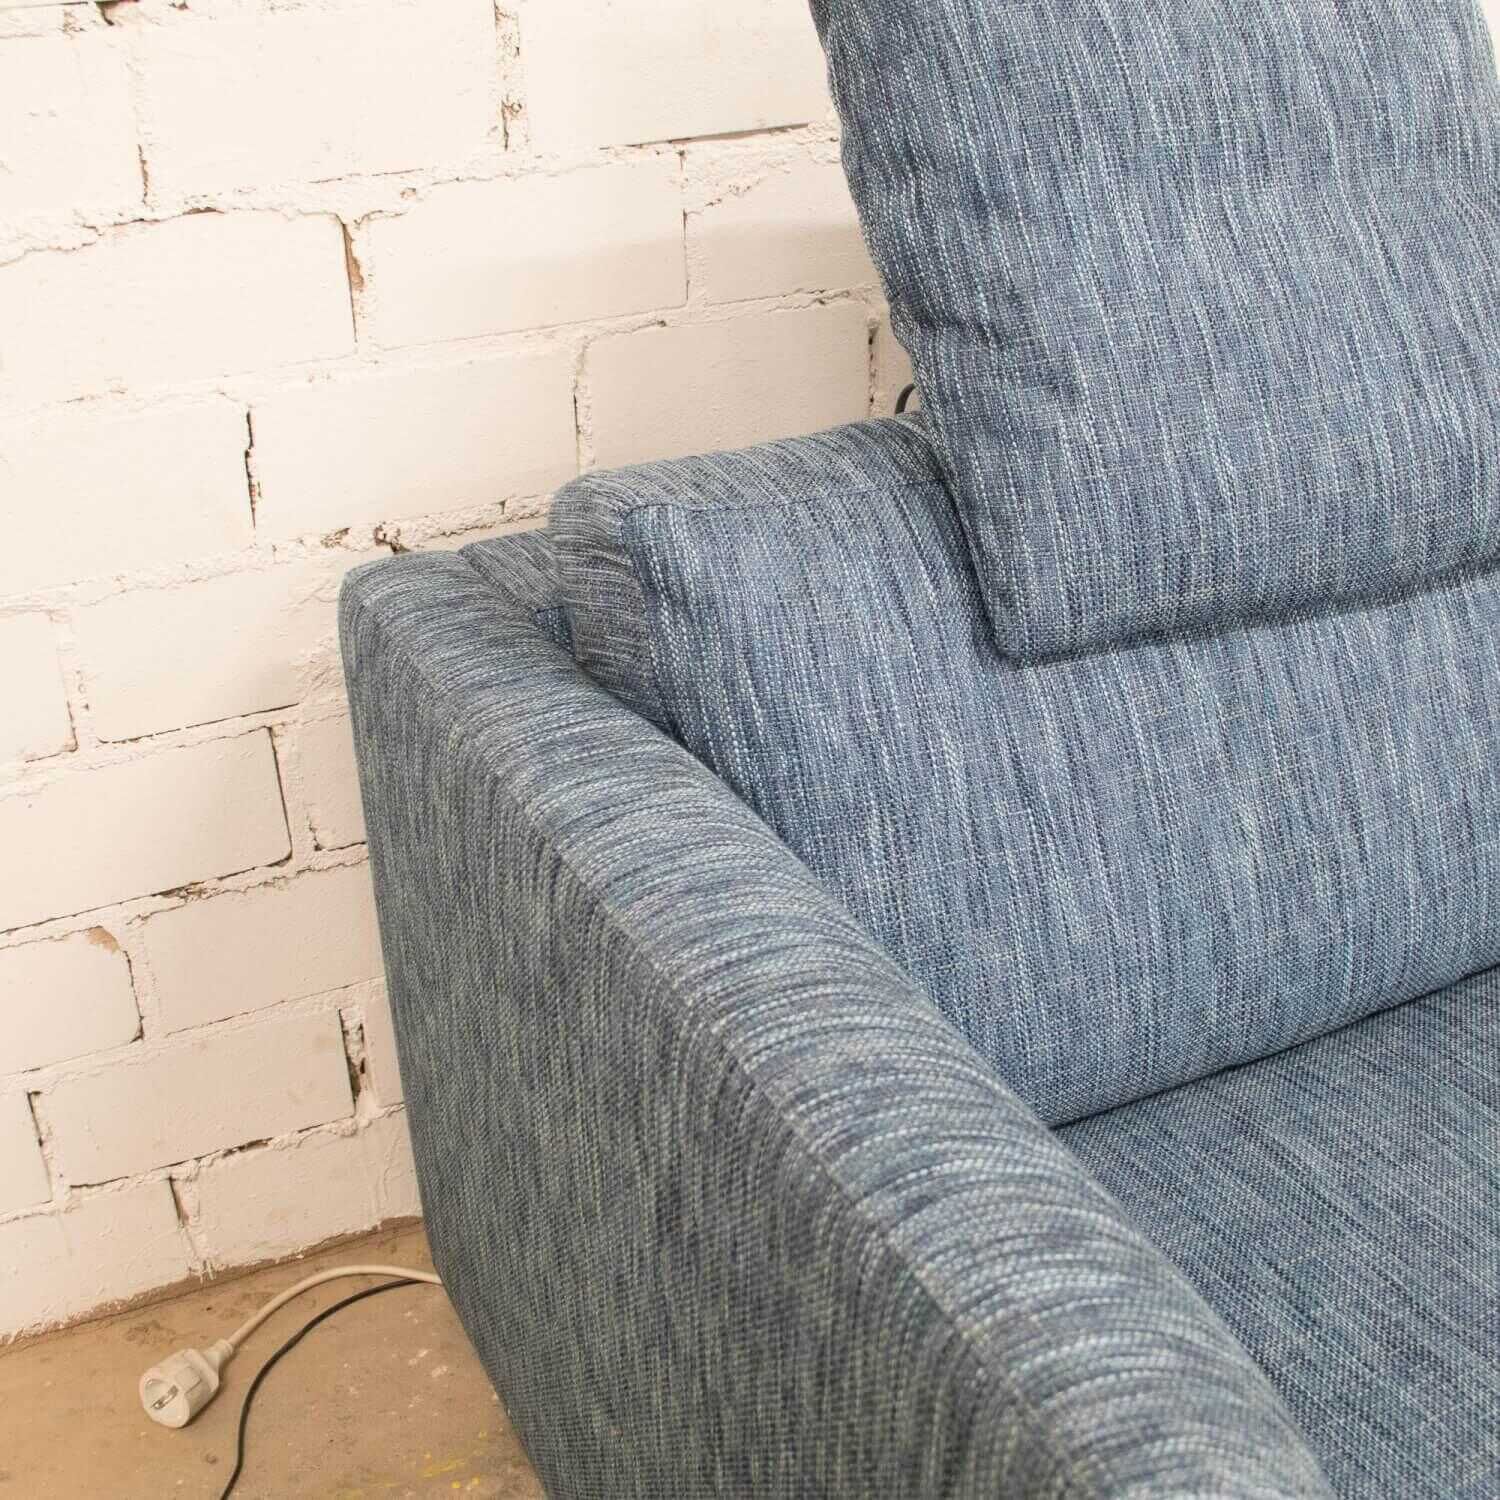 Sofa 2-Sitzer Inspiration Stoff Nevada Blau mit 2 Kopfstützen